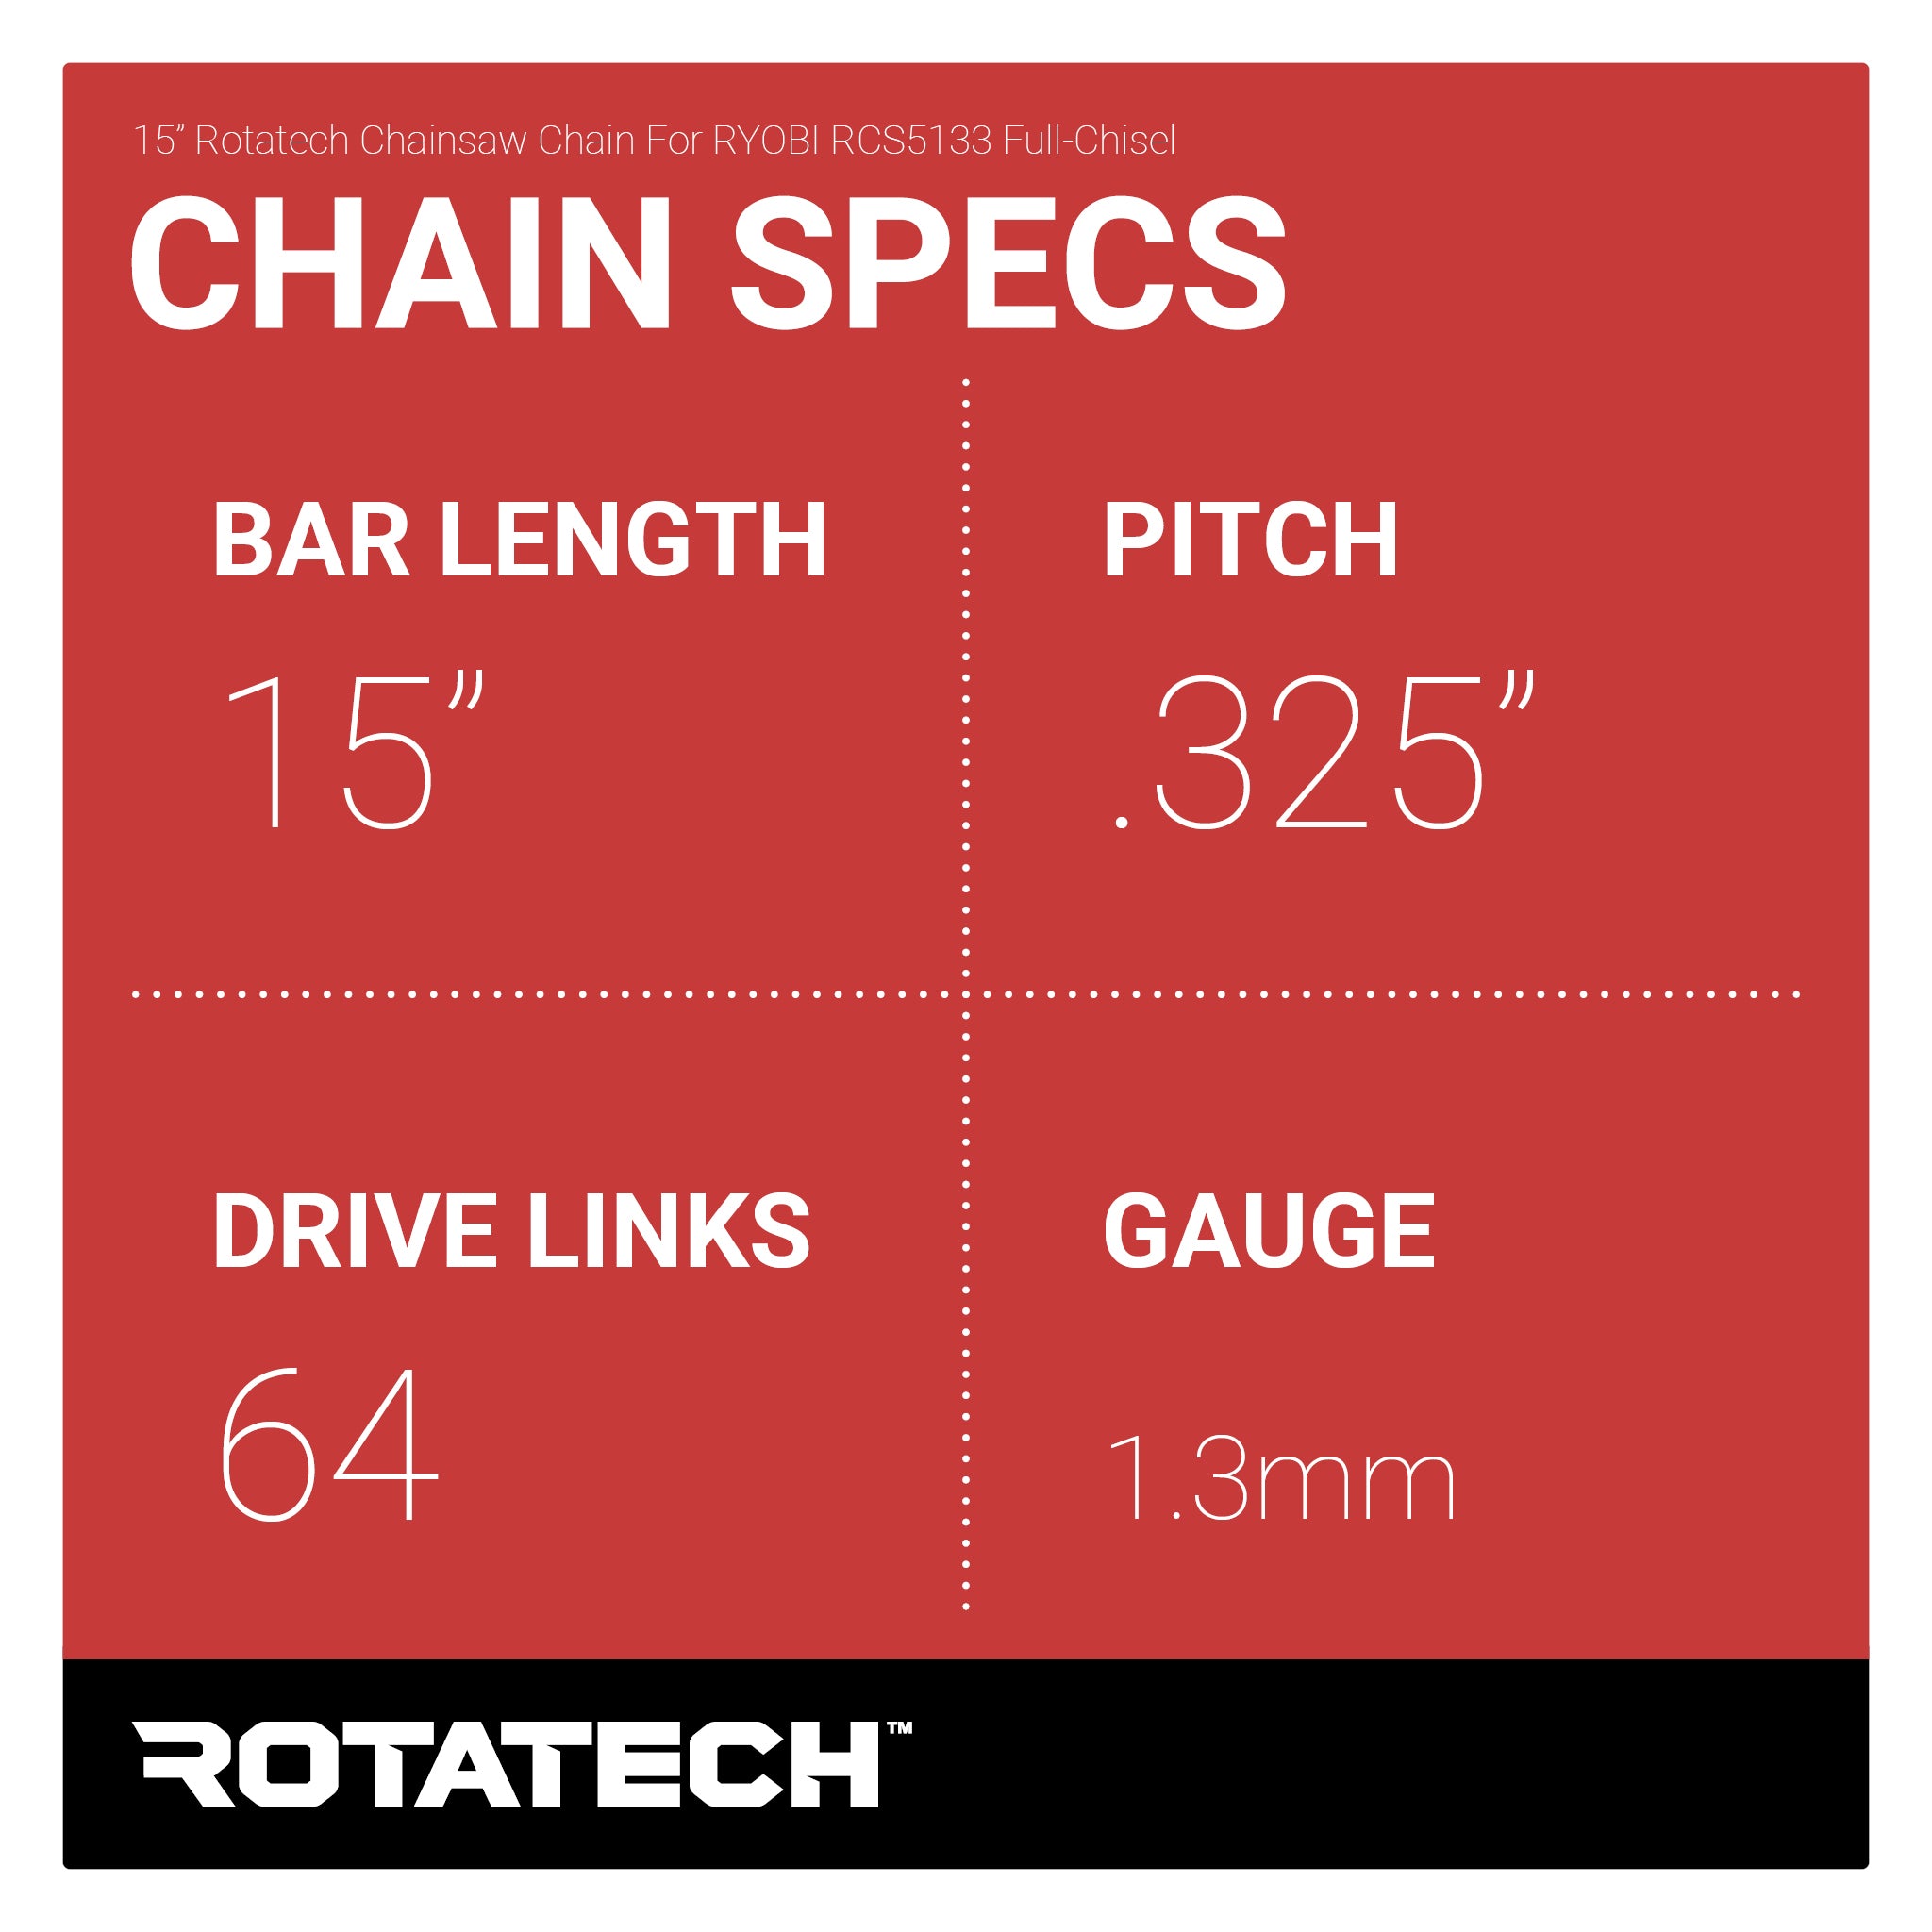 15" Rotatech Chainsaw Chain For RYOBI RCS5133 Full-Chisel Chain Specs